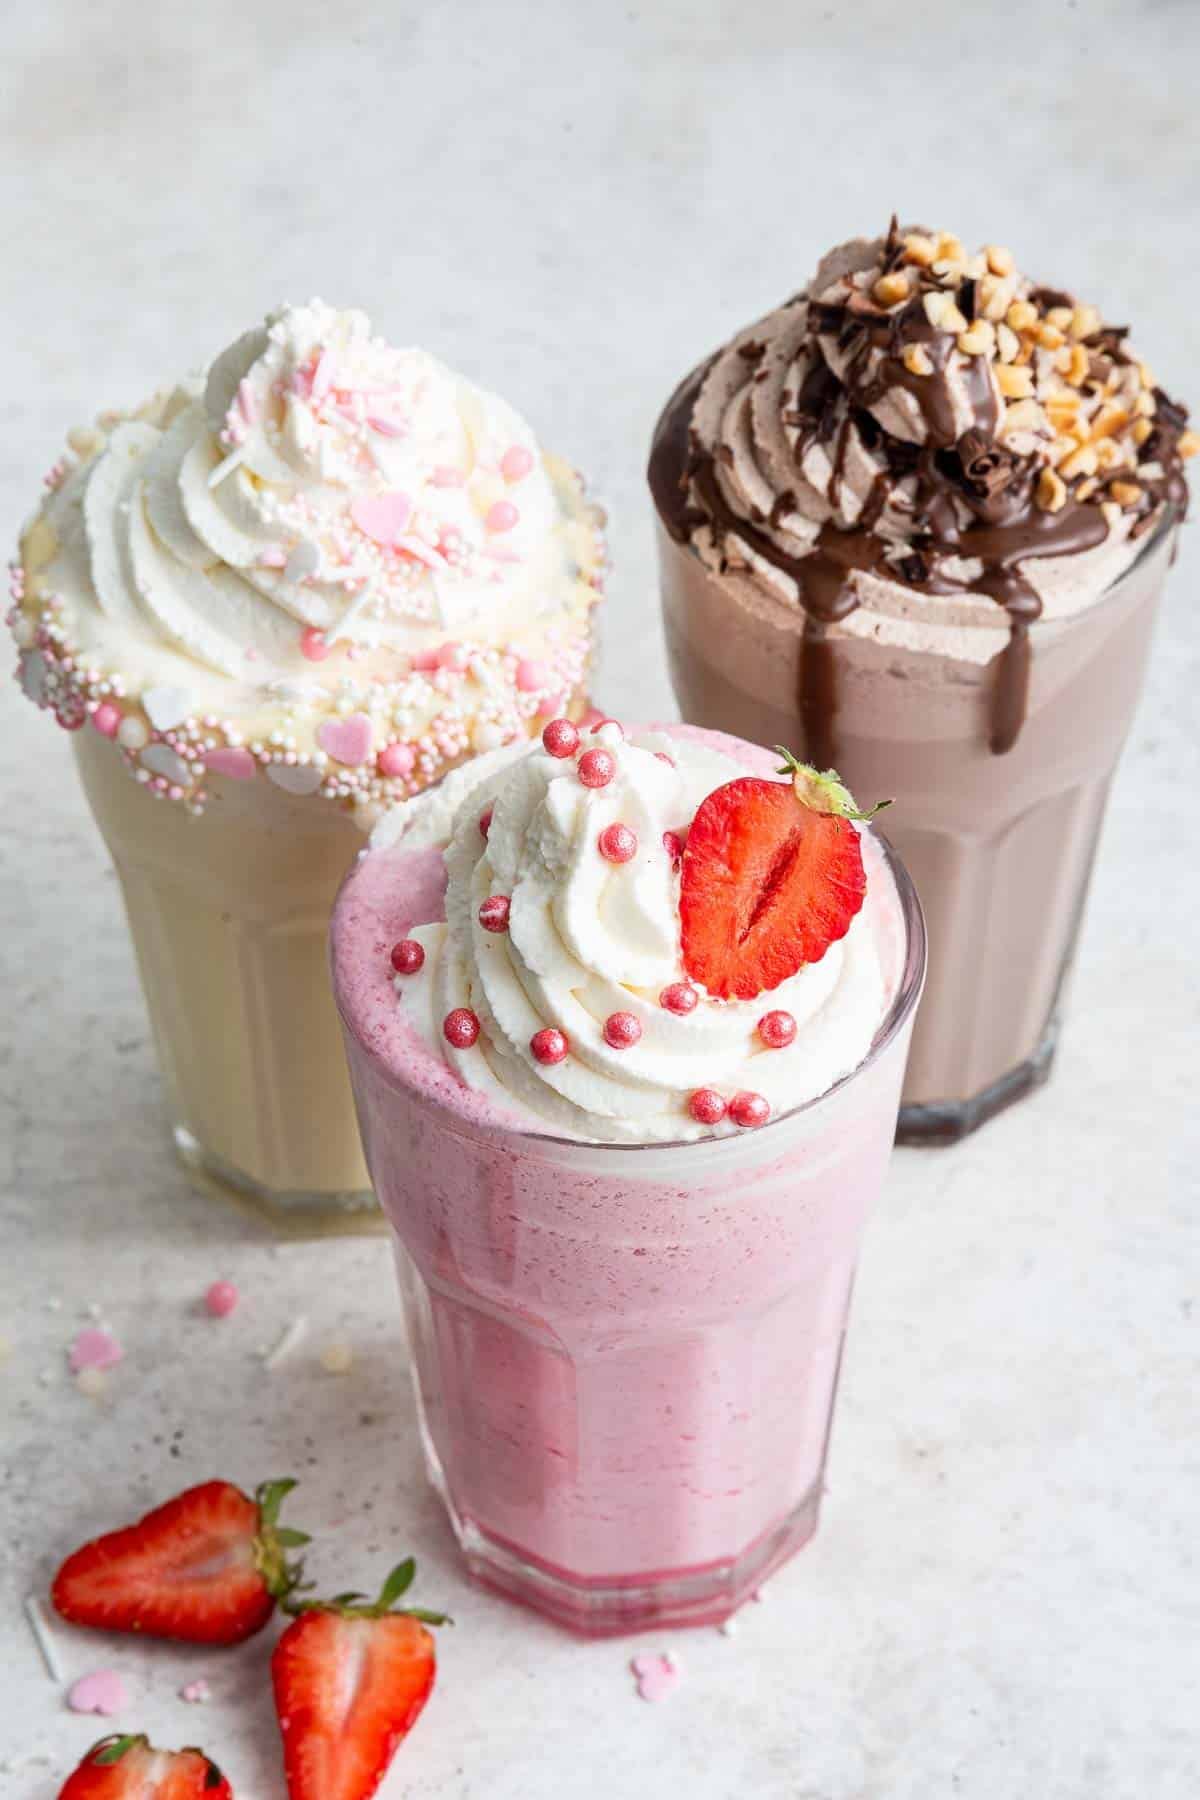 https://www.dessertfortwo.com/wp-content/uploads/2022/08/How-to-Make-a-Milkshake-11.jpg